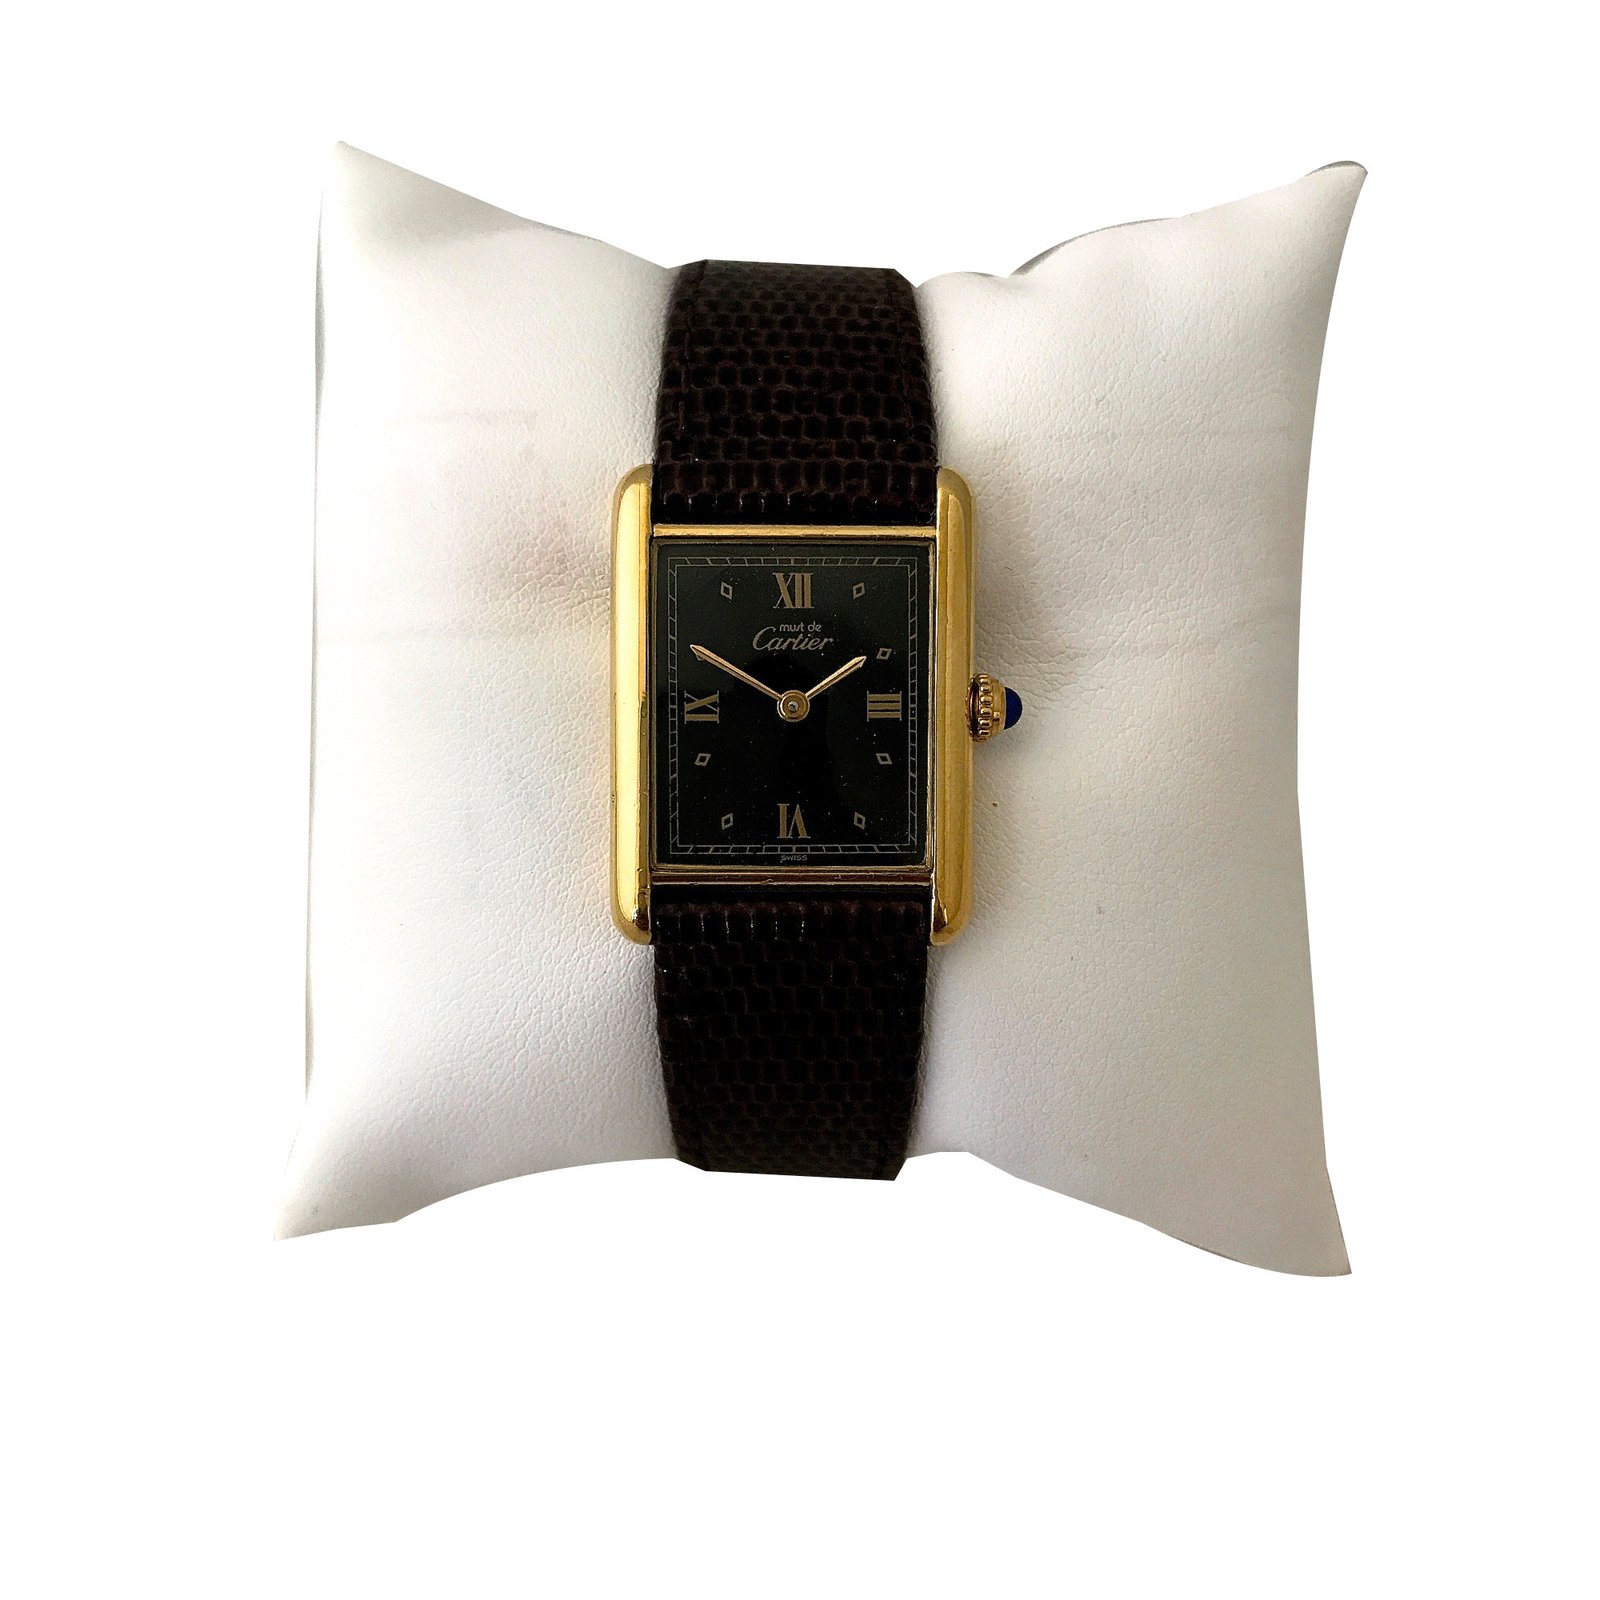 Cartier Quartz Watches Quartz Watches 